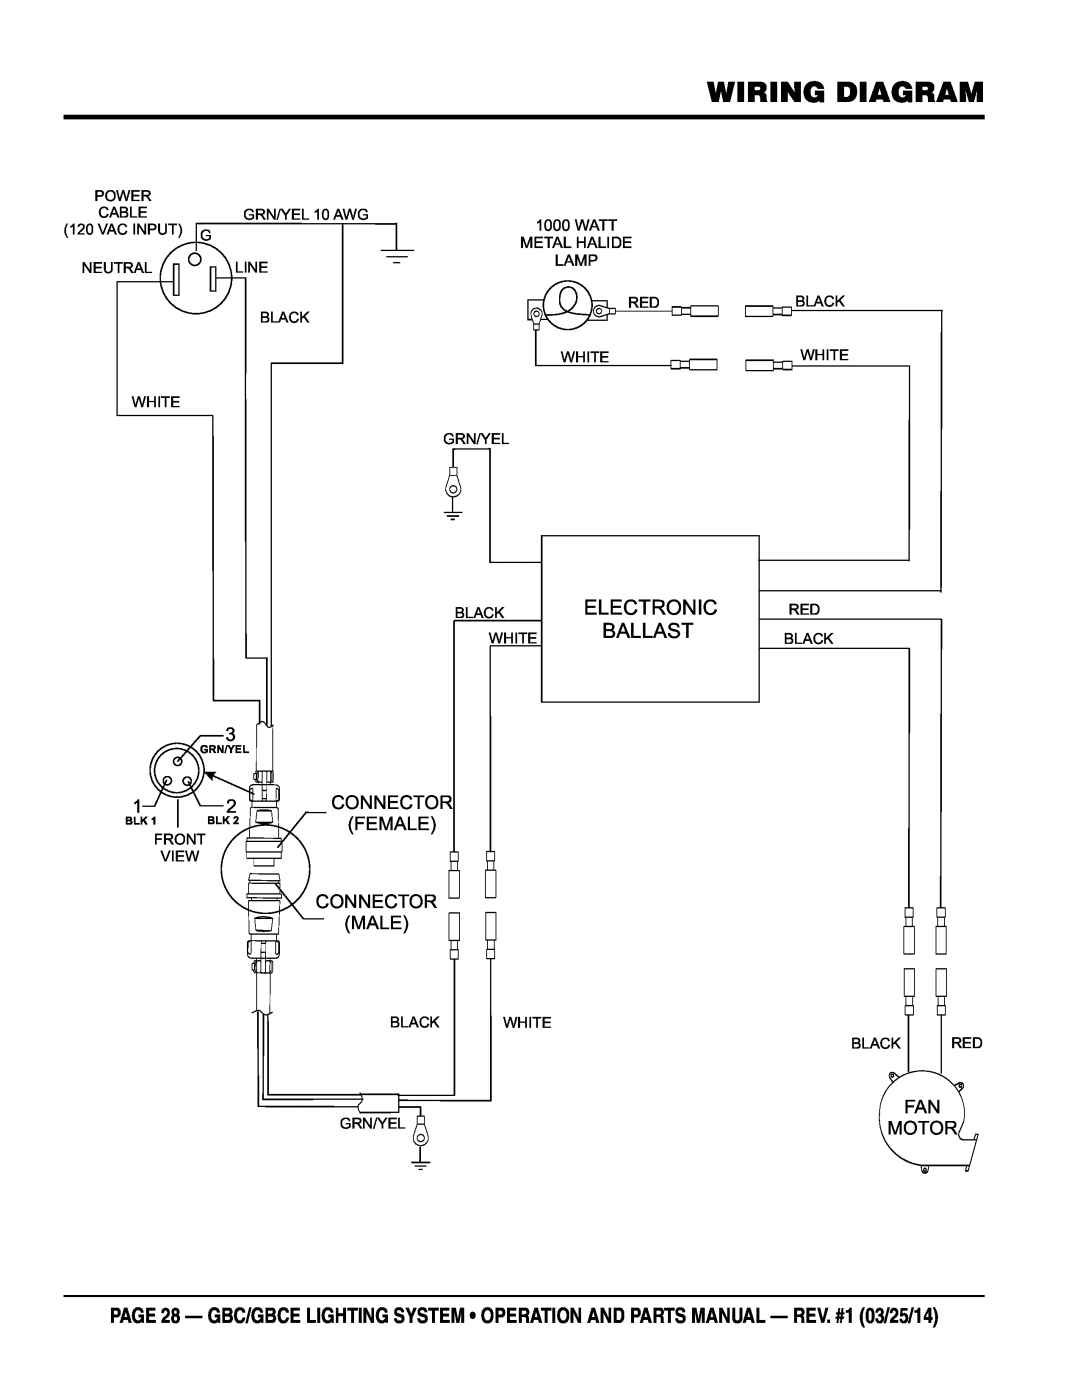 Multiquip gbe/gbce wiring diagram, Black Electronic White Ballast, Connector, Female, Male, Motor, Watt Metal Halide Lamp 